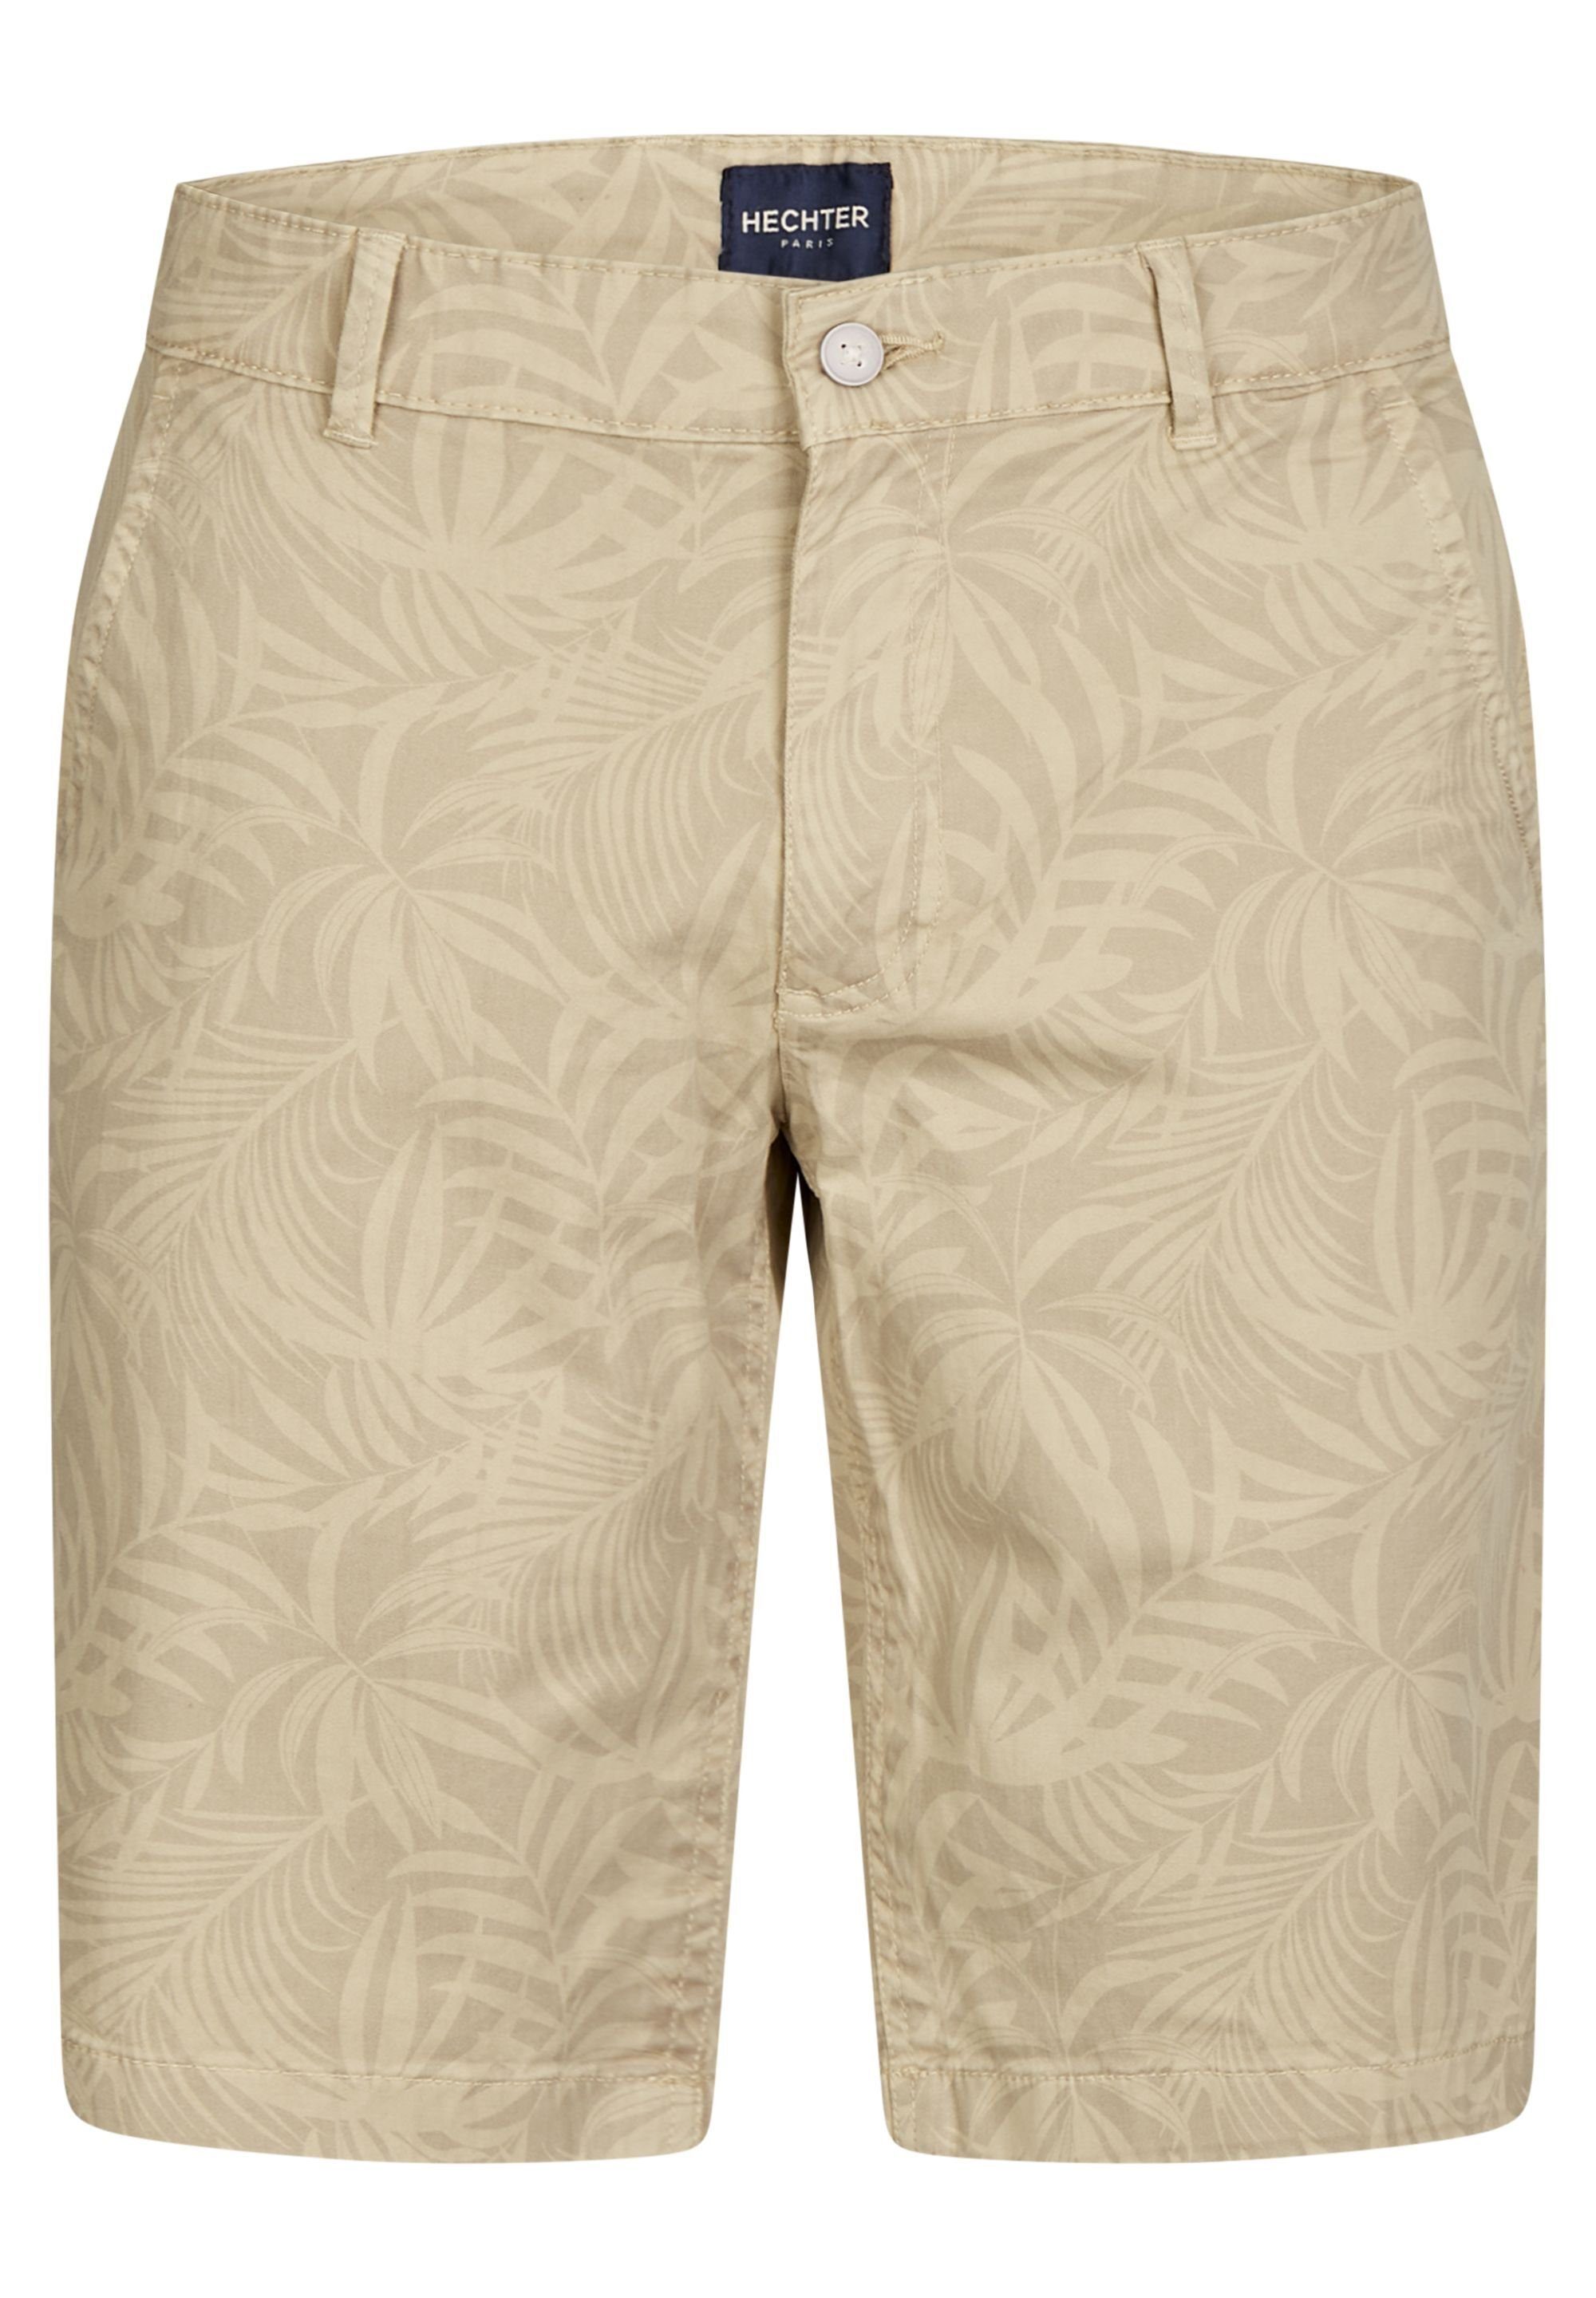 HECHTER PARIS Shorts mit floralem Muster | Shorts